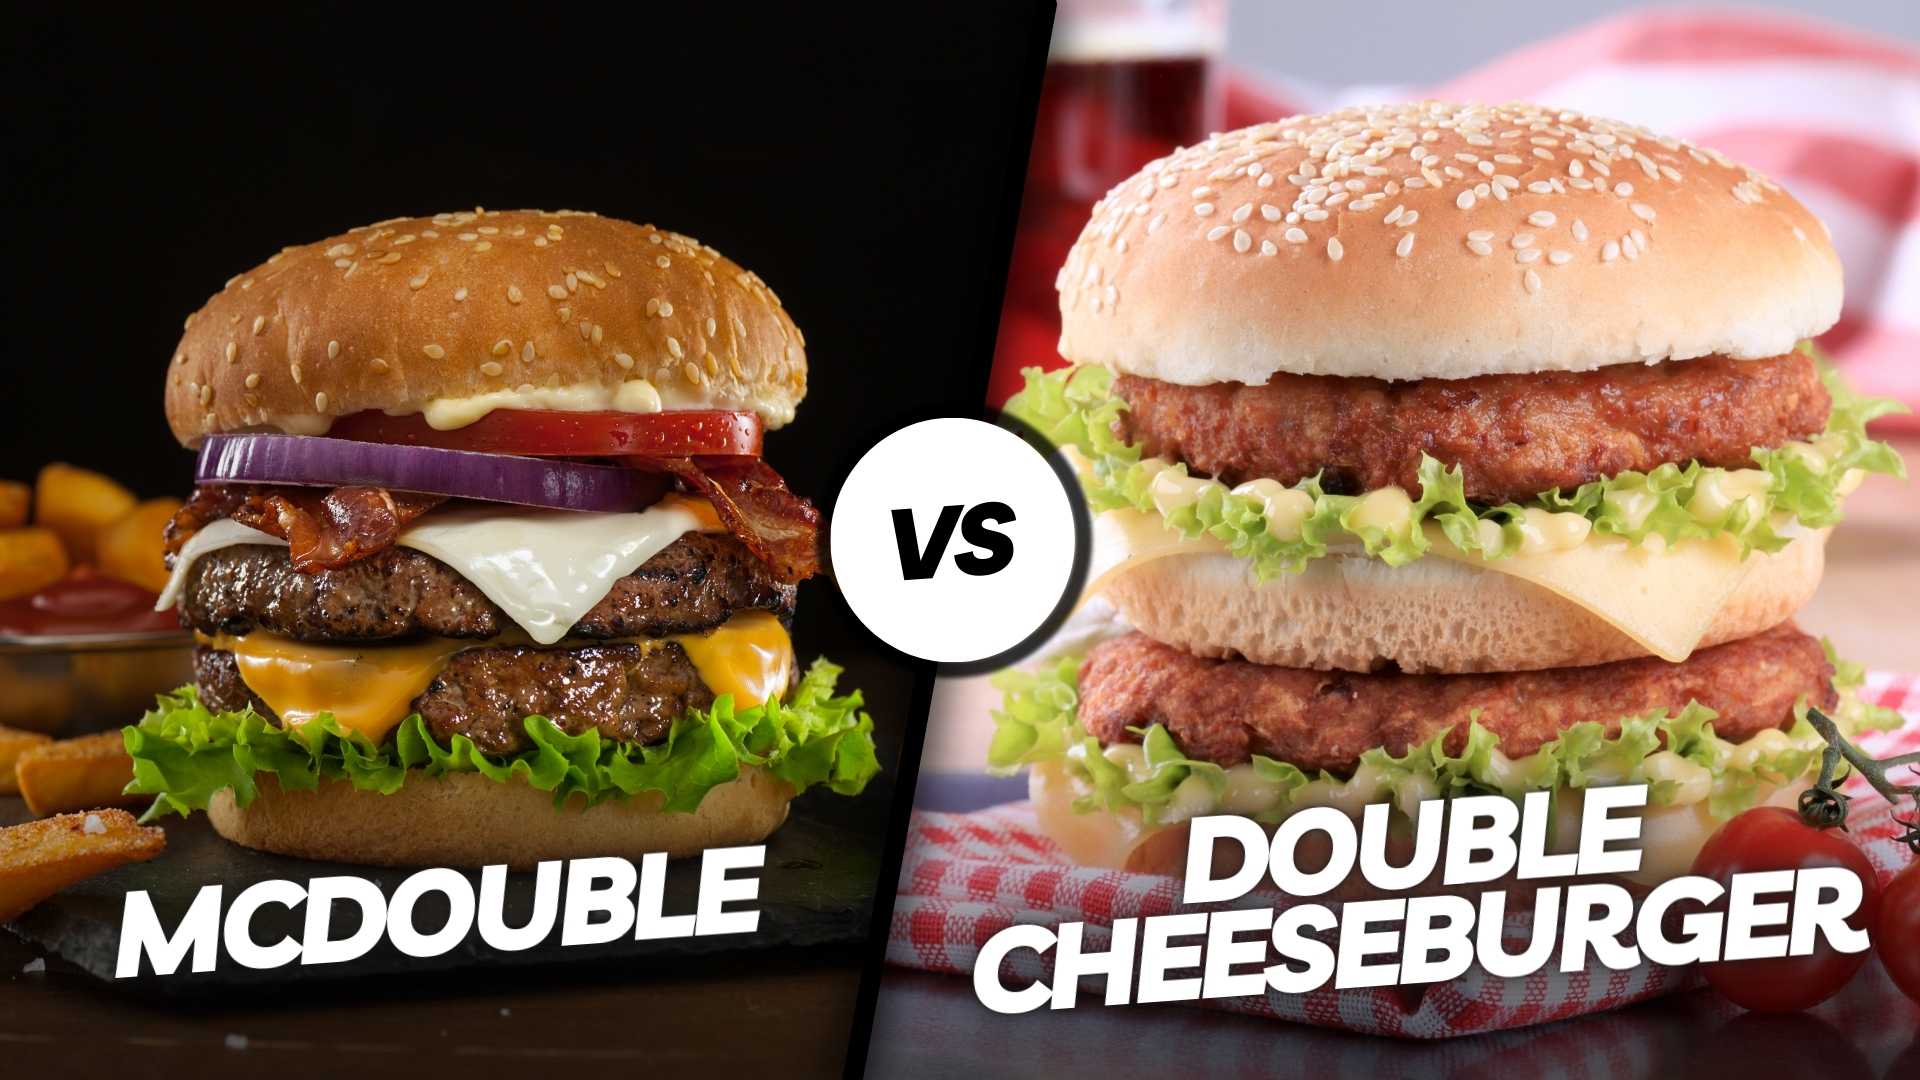 McDouble vs Double Cheeseburger